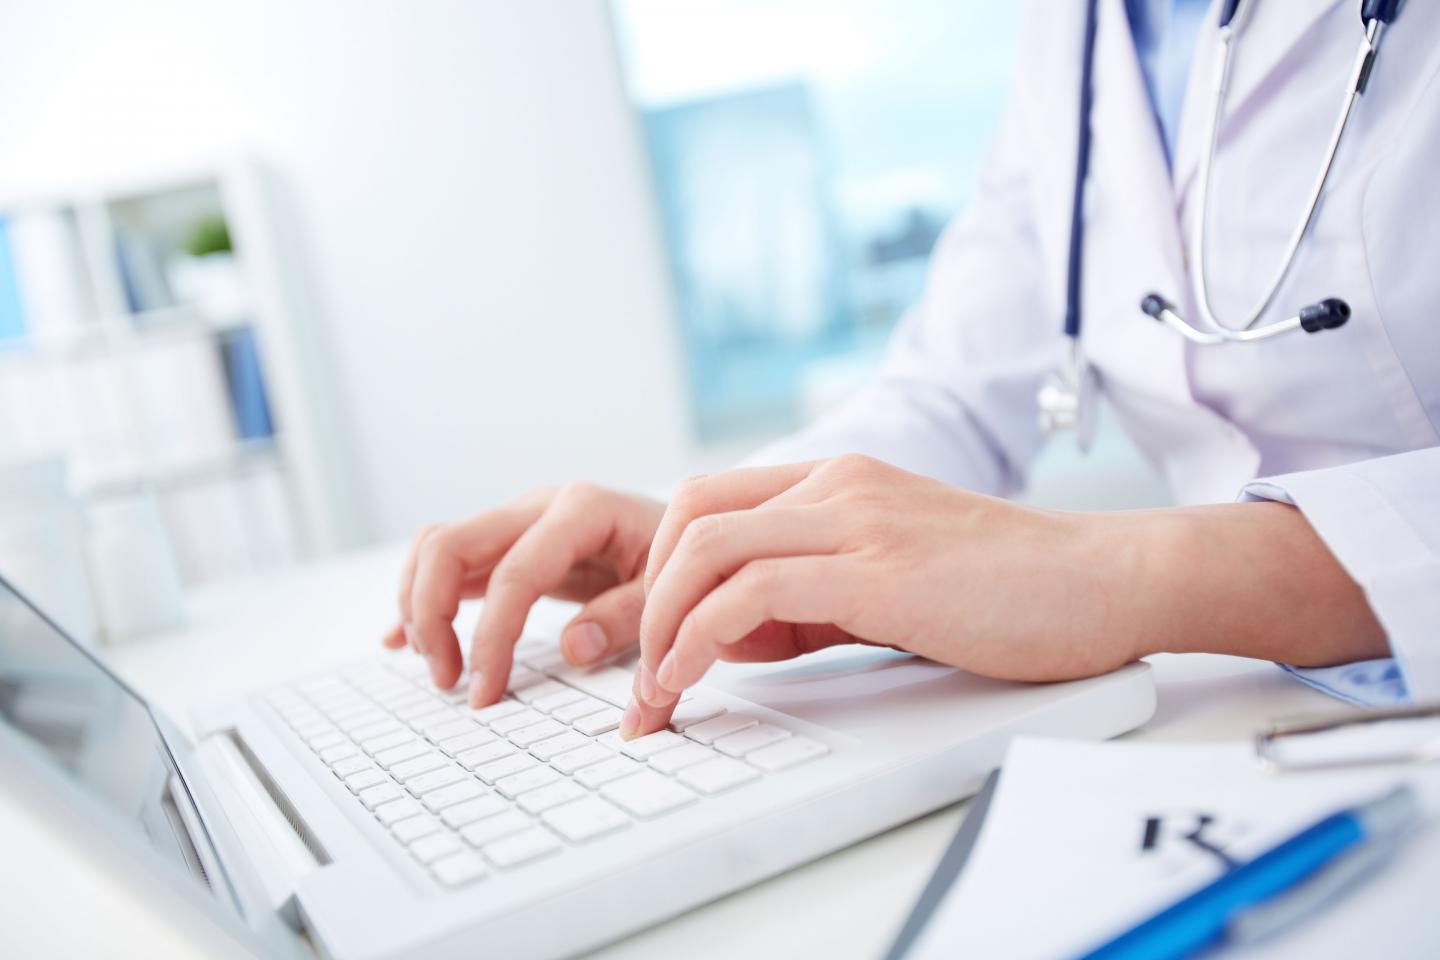 Computing is vital to modern healthcare